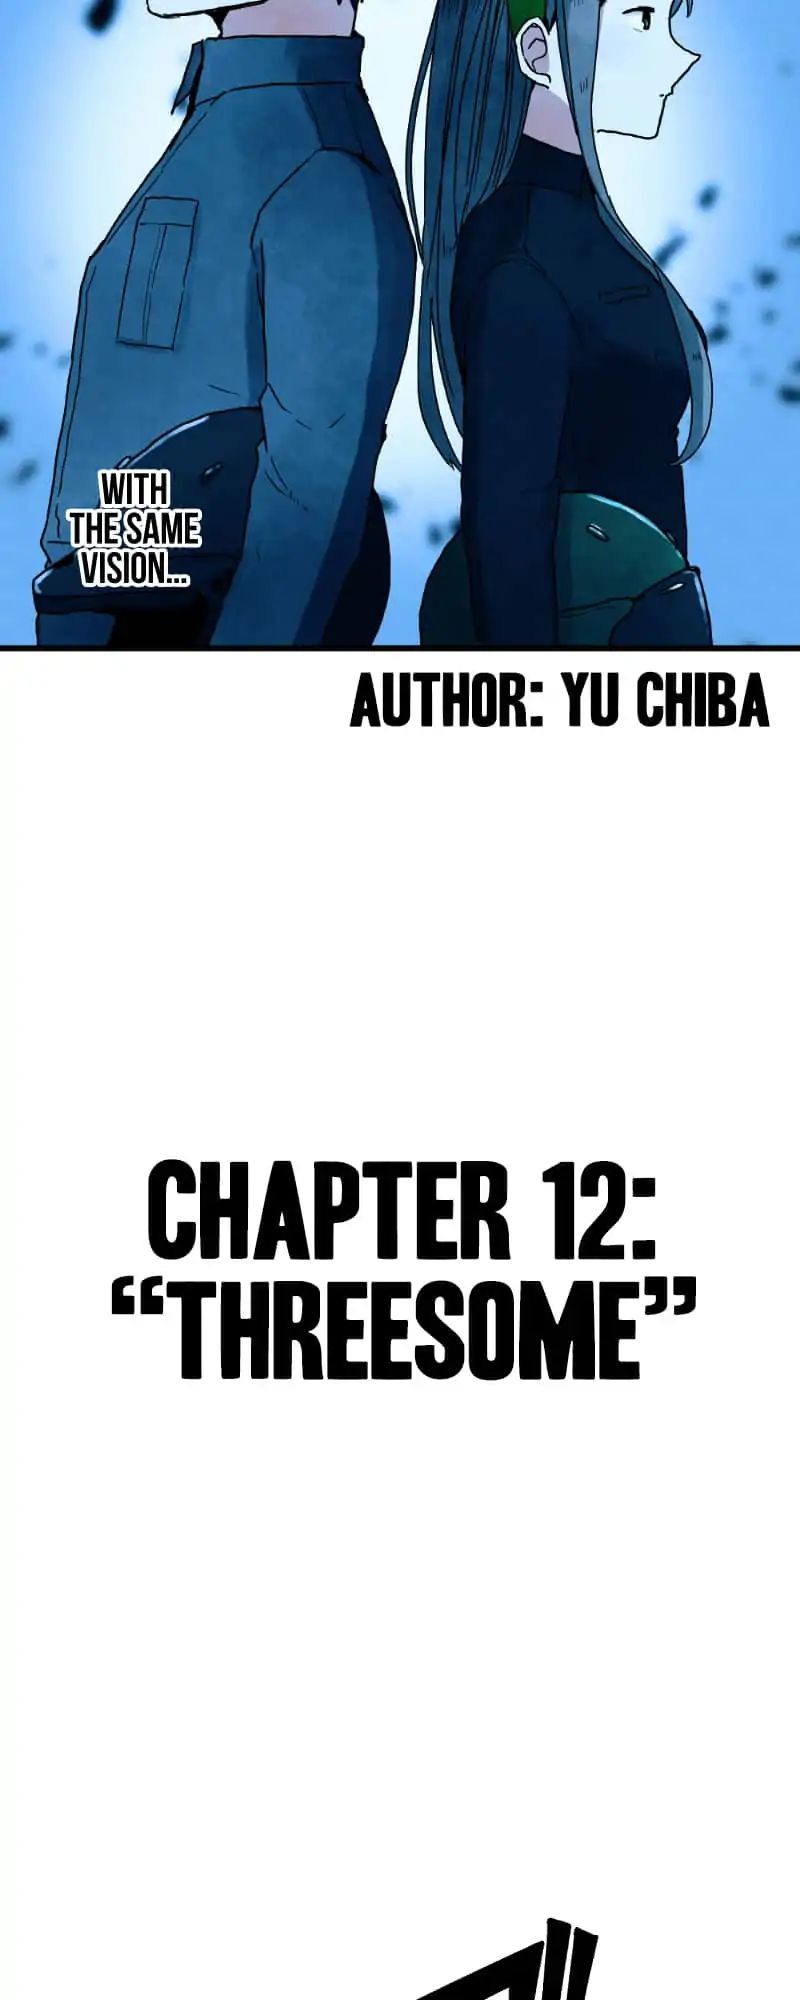 Dricam!! Chapter 12: Threesome